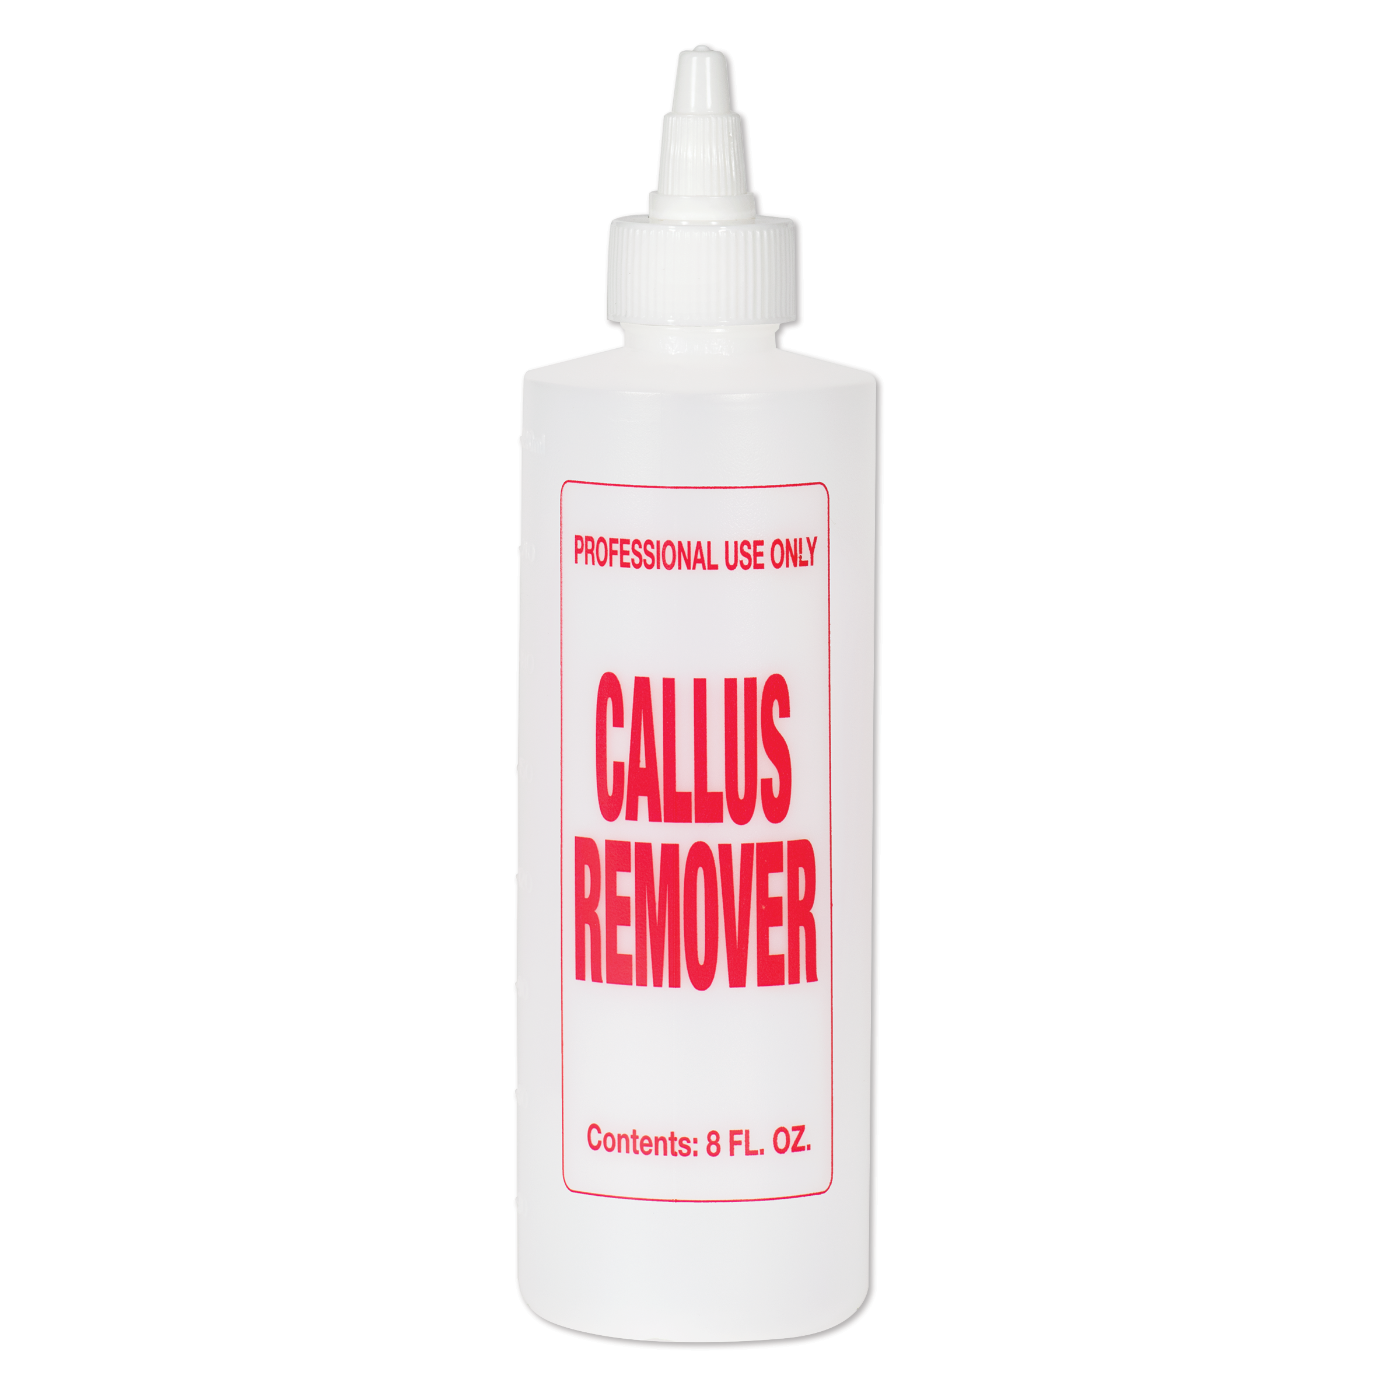 Imprinted Twist Top Bottle, Callus Remover, 8 oz.